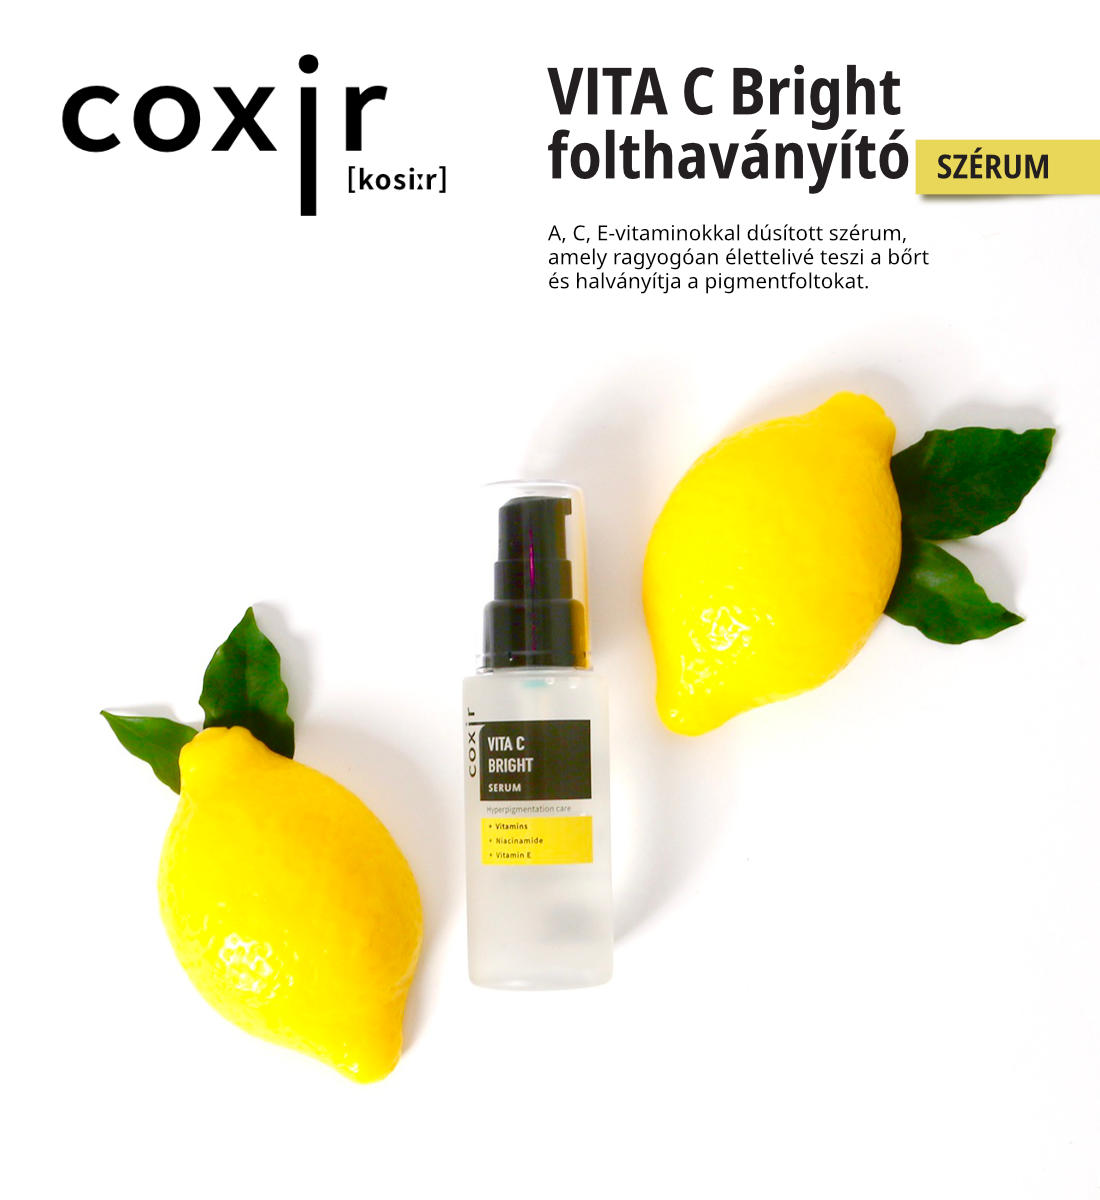 coxir-vita-C-Bright-folthalvanyito-szerum